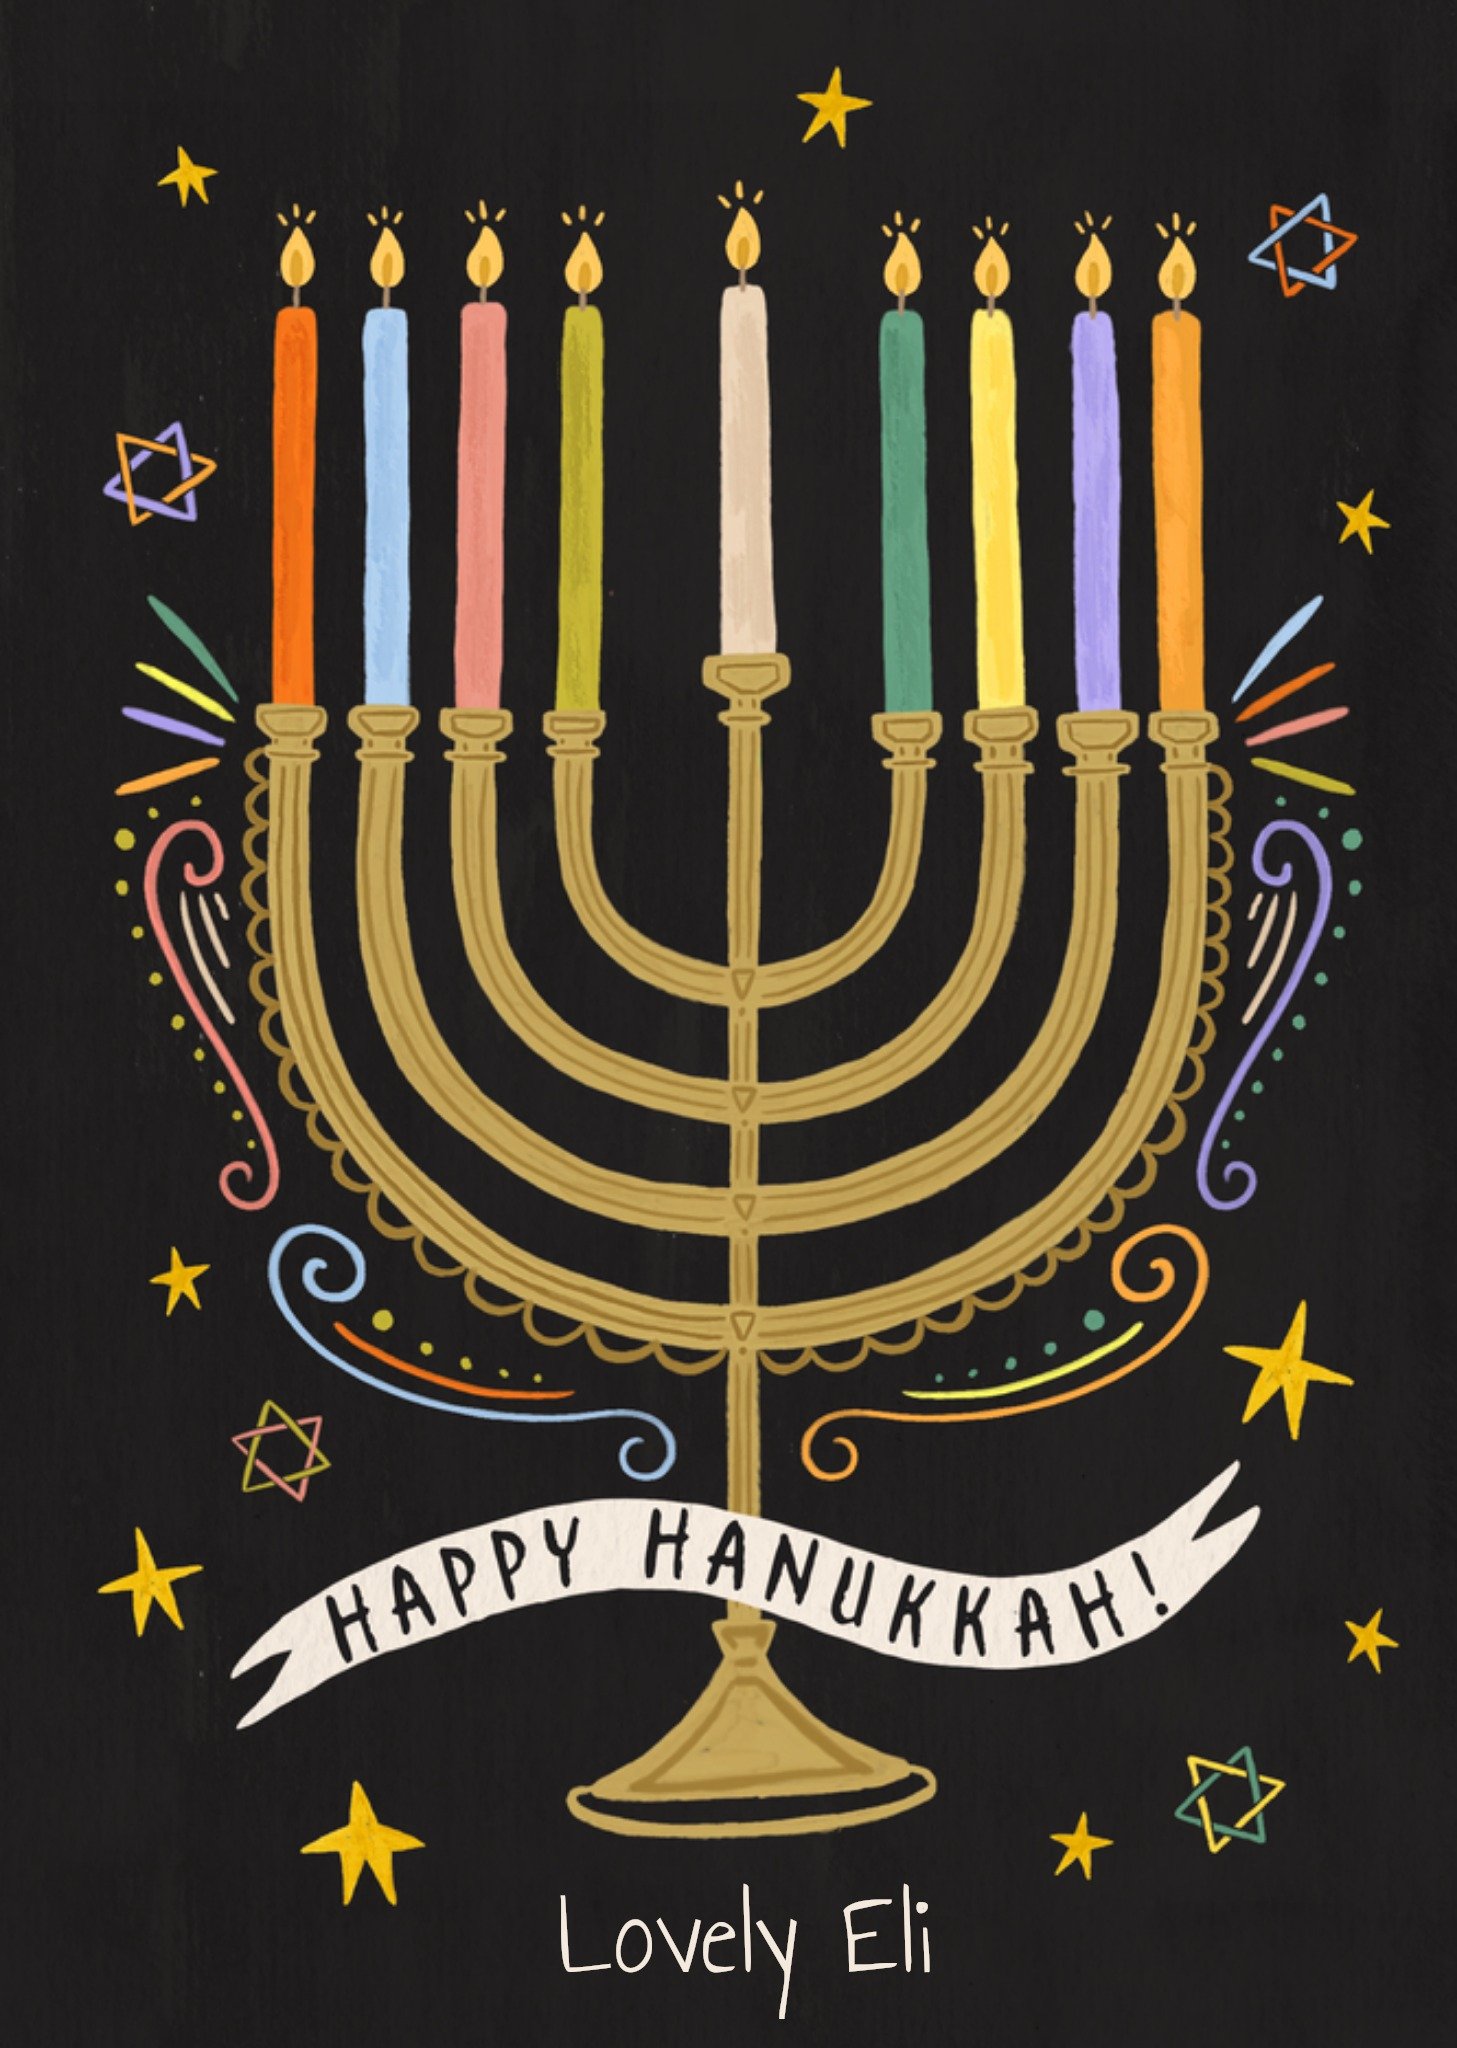 Moonpig Fun Colourful Illustrated Menorah Candelabra Hanukkah Card Ecard